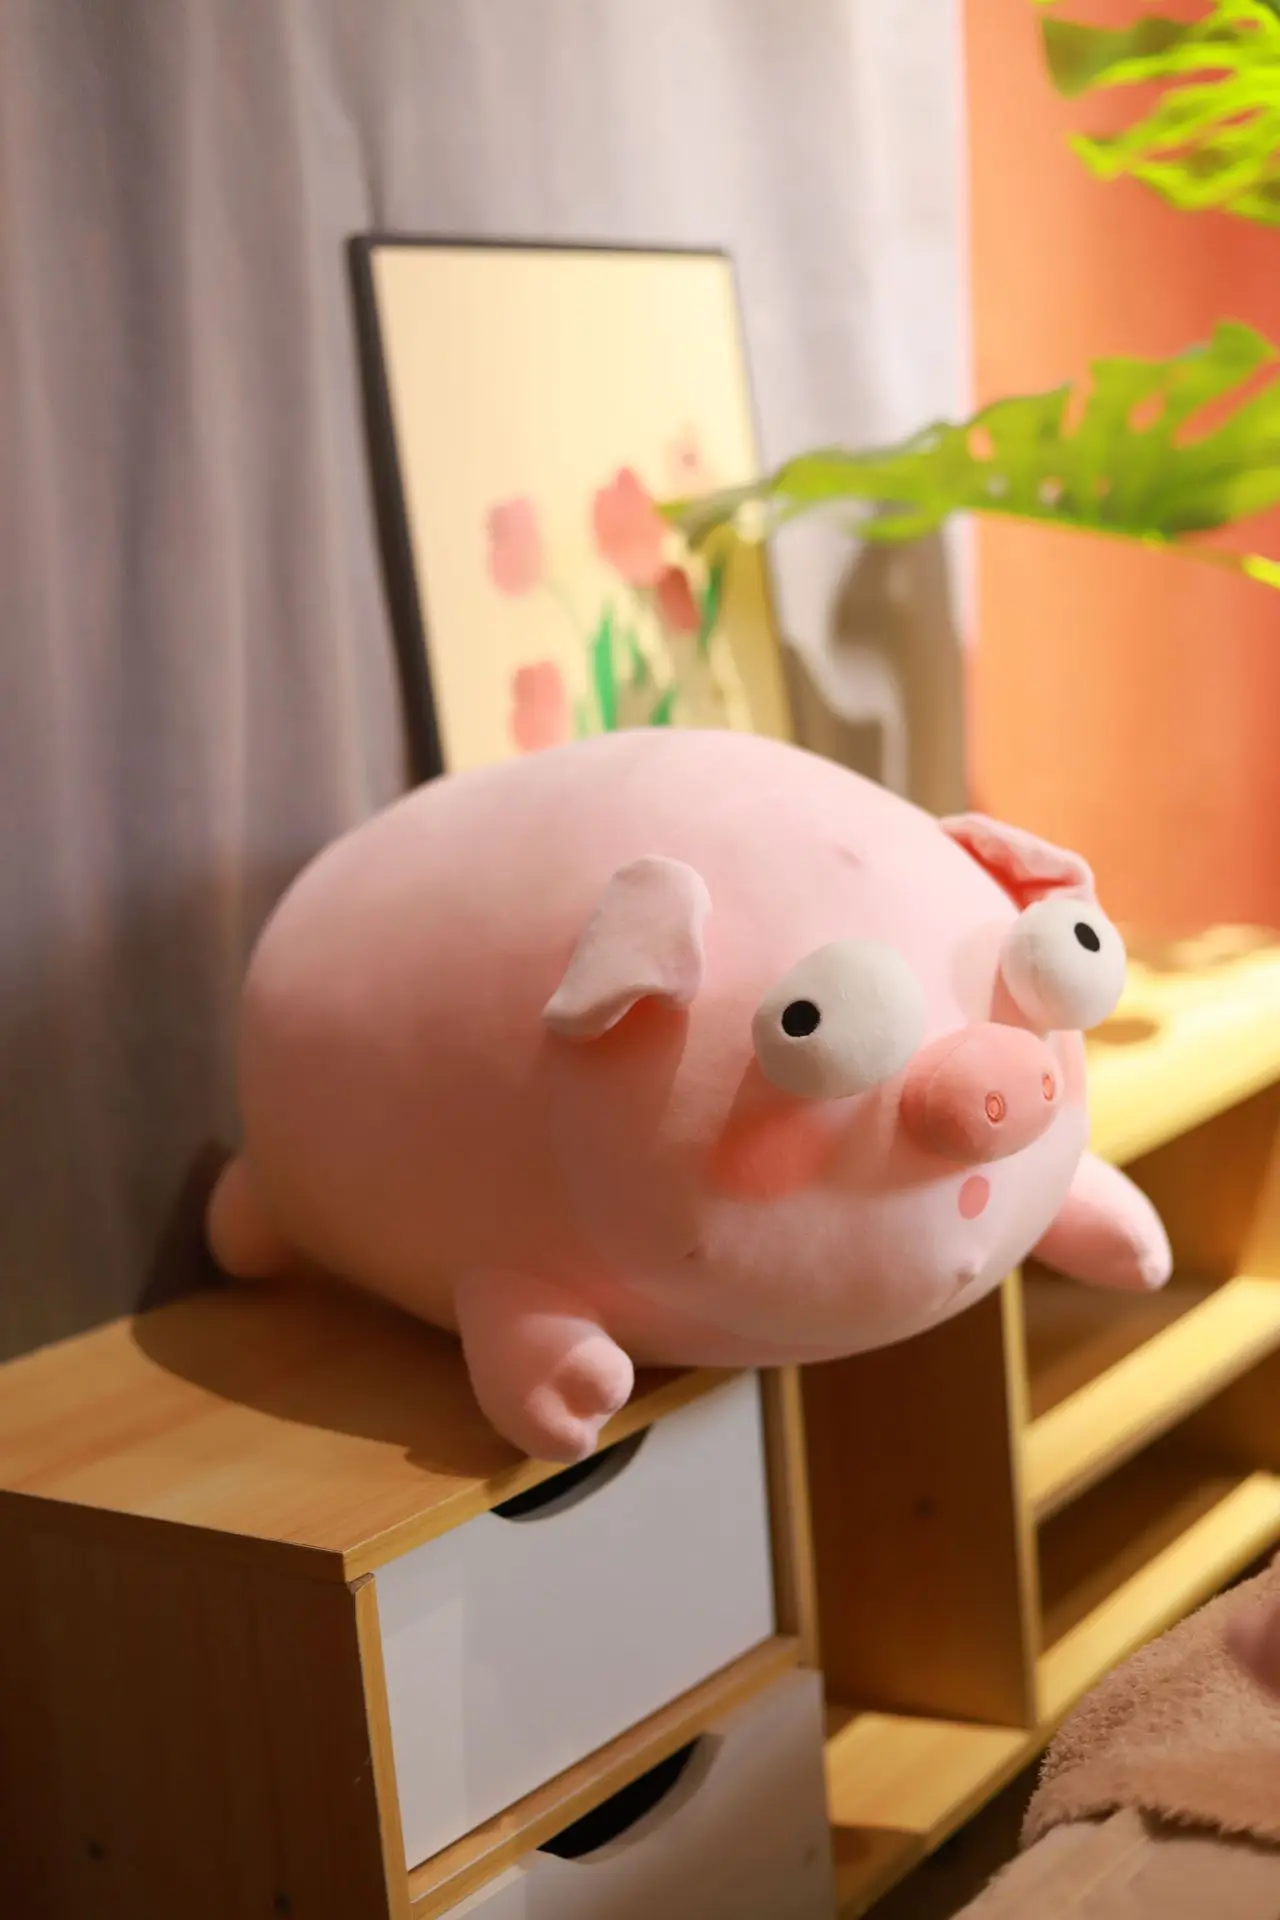 Sea Pig Plush | Big Eyes Ugly Sleeping Pig Plush Toy -8